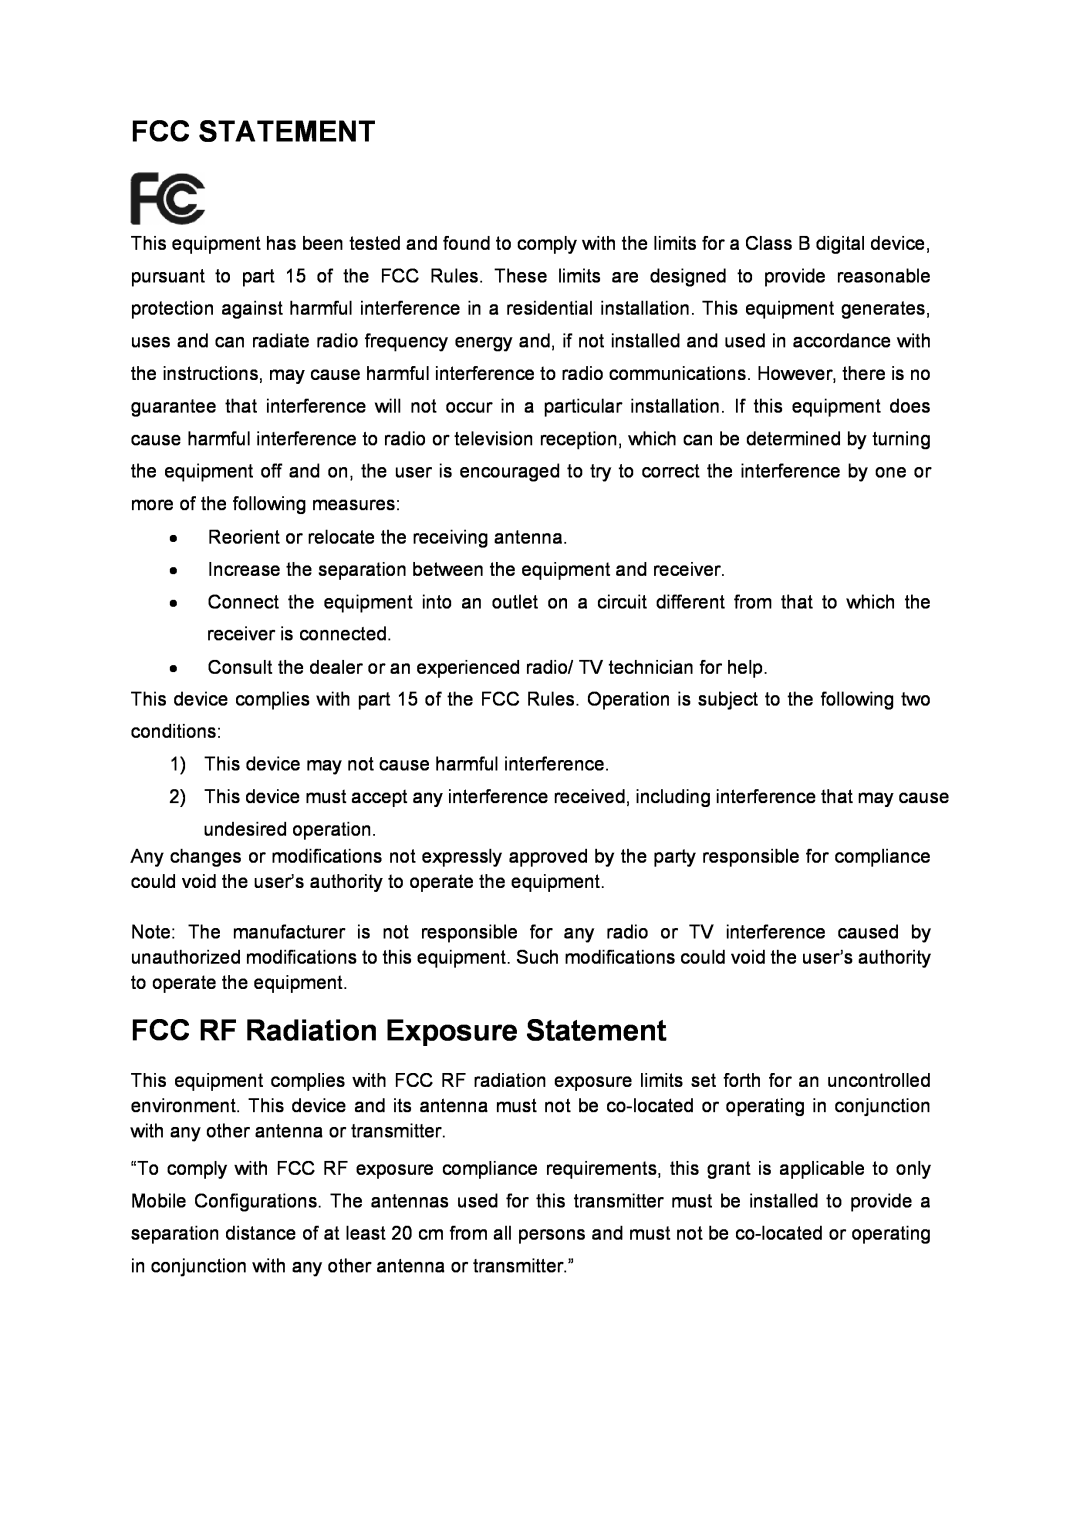 TP-Link TL-WN881ND manual Fcc Statement, FCC RF Radiation Exposure Statement 